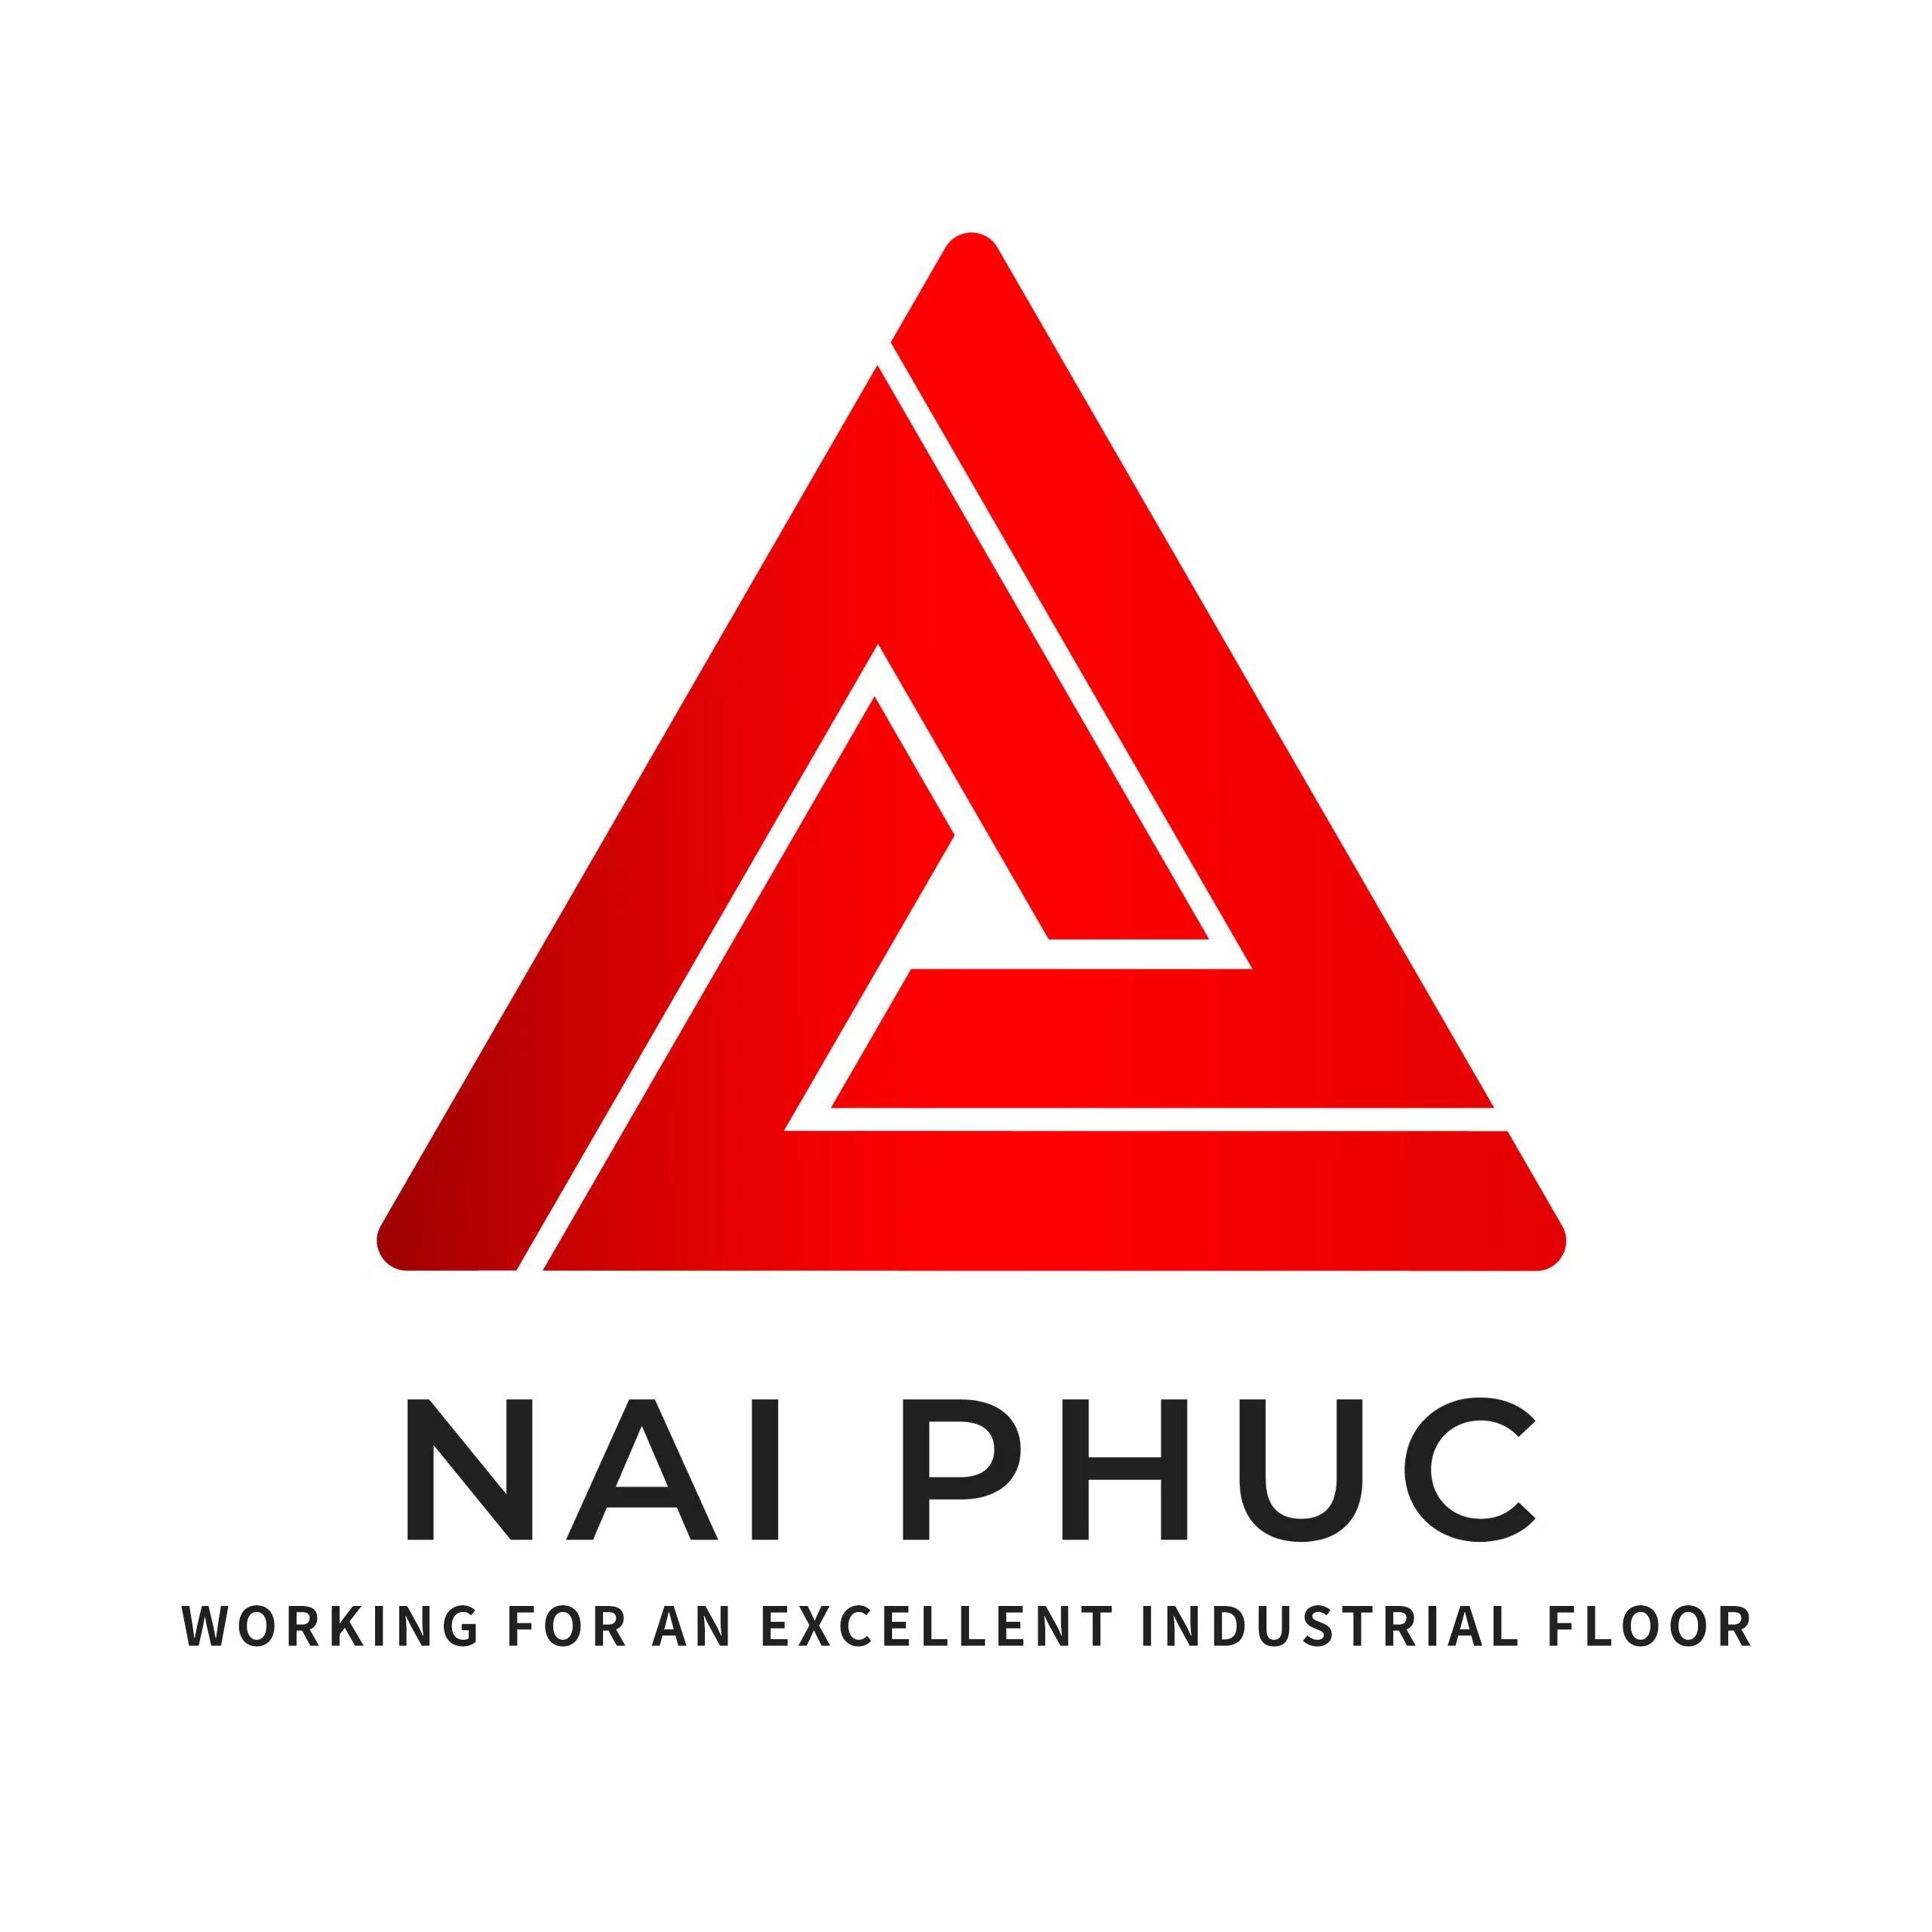 Latest Công Ty TNHH Công Nghiệp Nai Phúc Việt Nam employment/hiring with high salary & attractive benefits